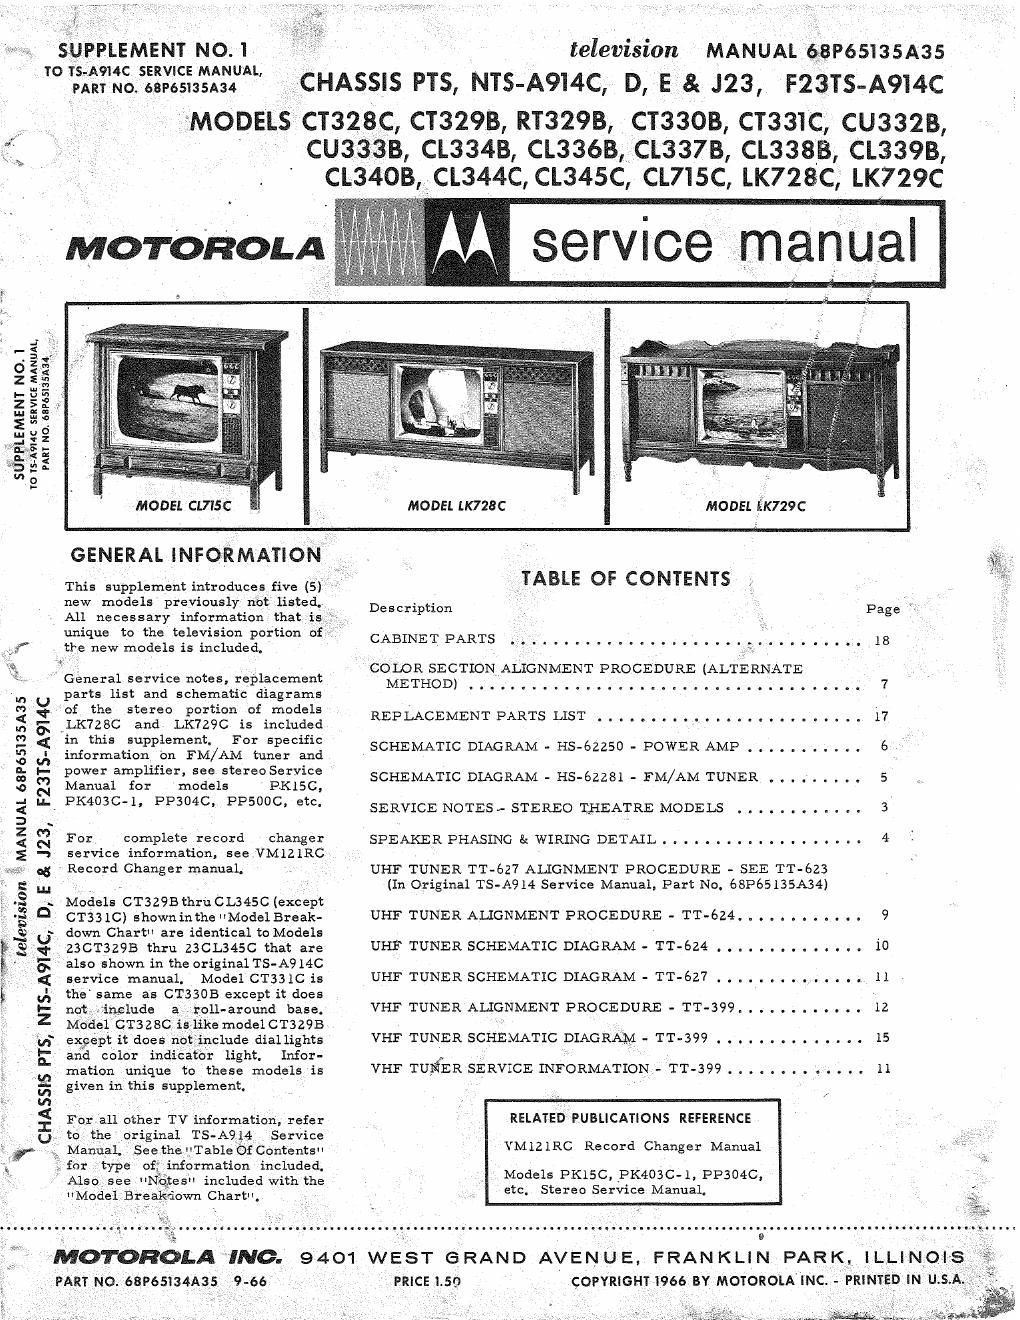 motorola cu 332 b service manual